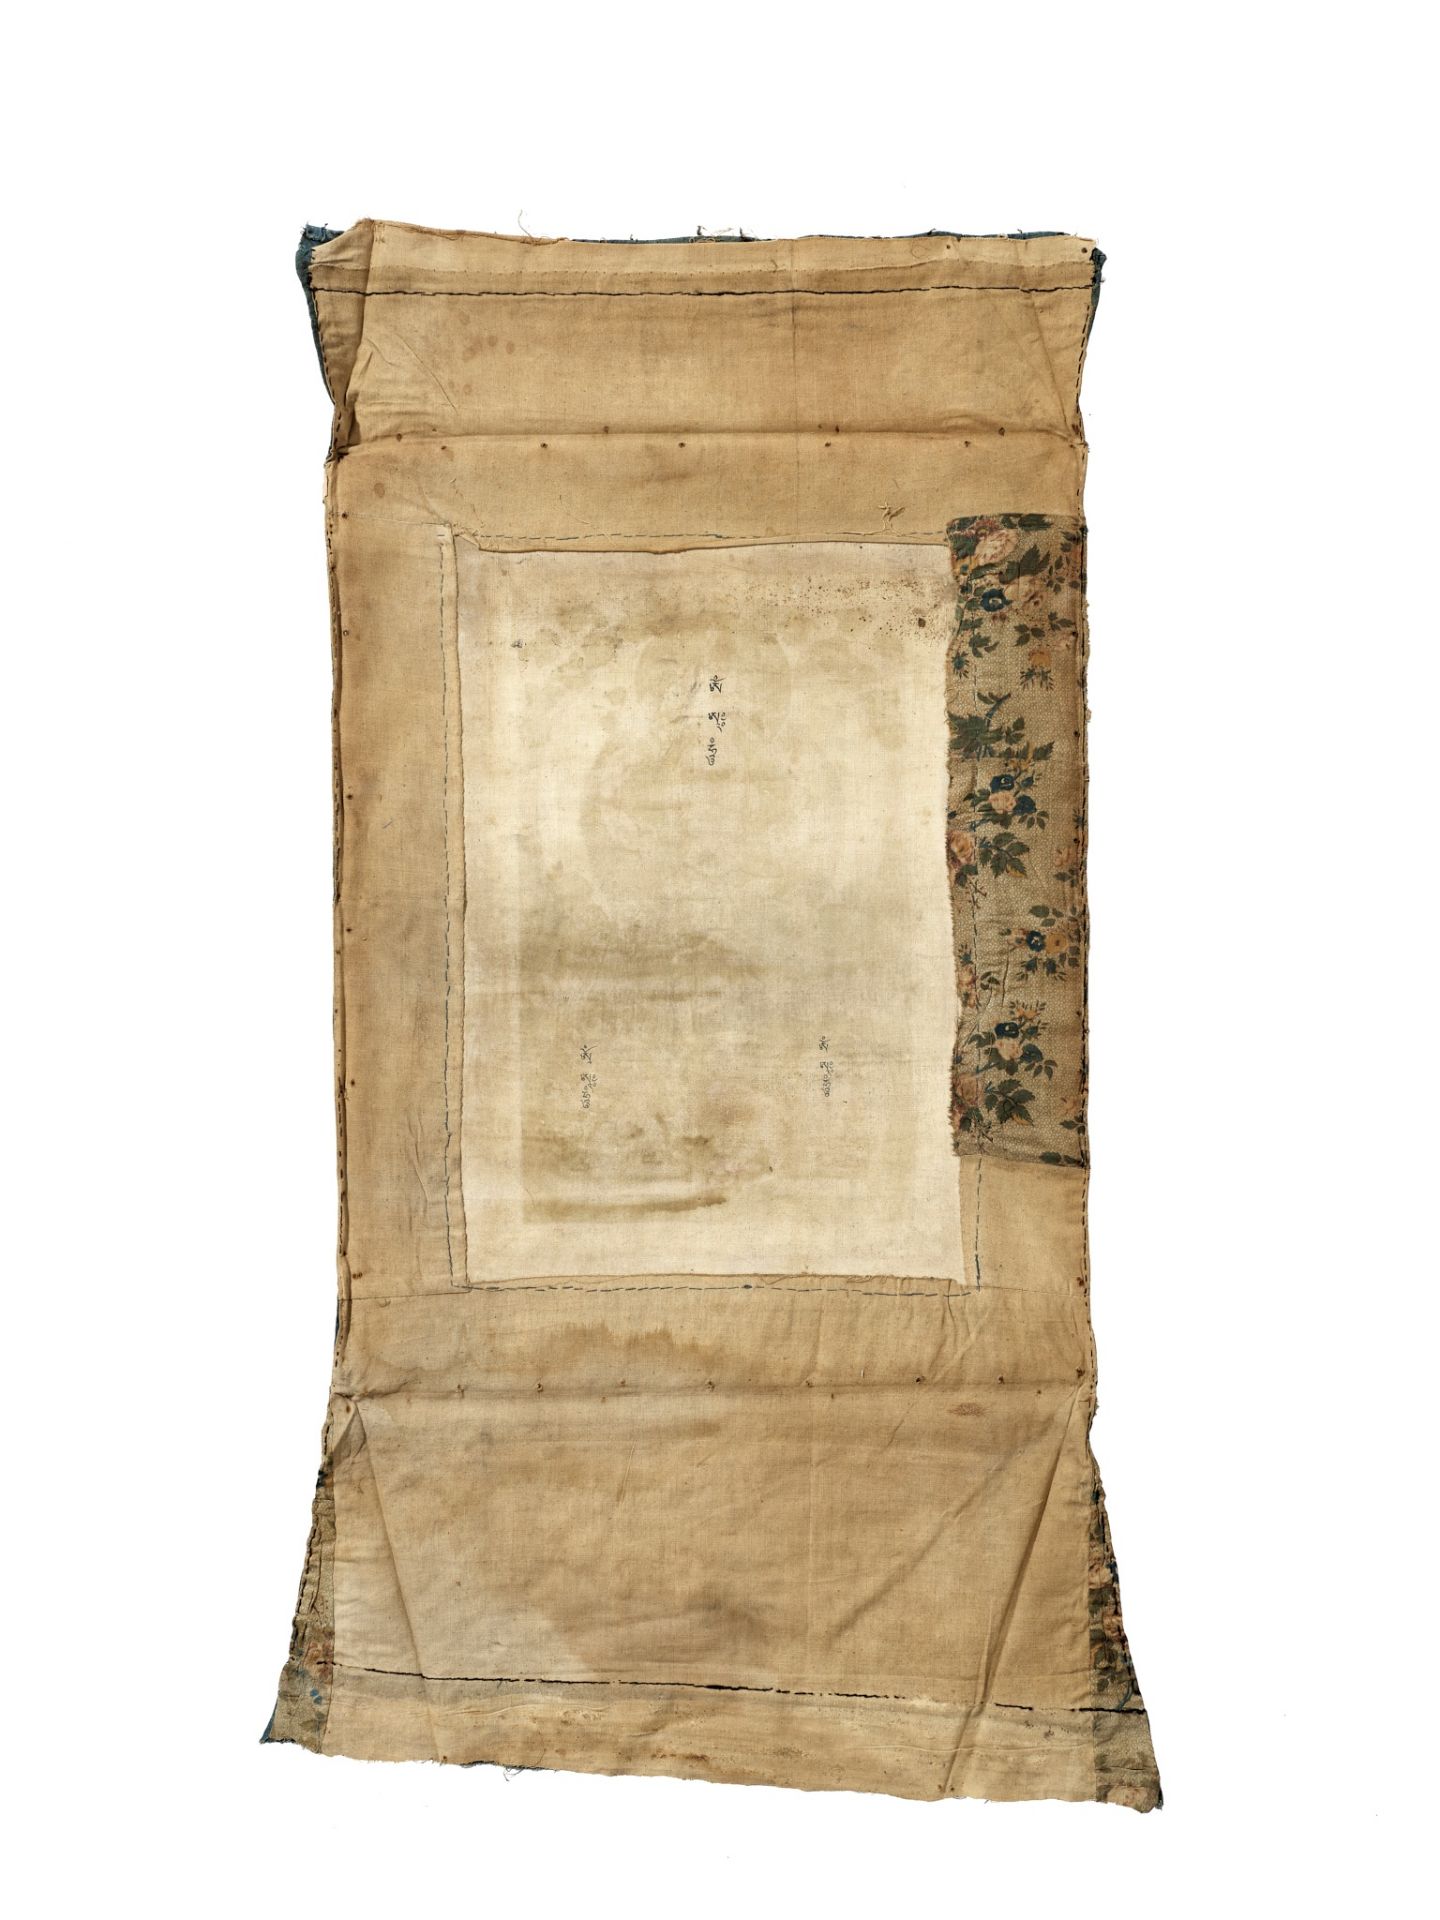 A THANGKA OF CHATURBHUJA AVALOKITESHVARA, TIBET, 18TH-19TH CENTURY - Image 11 of 17